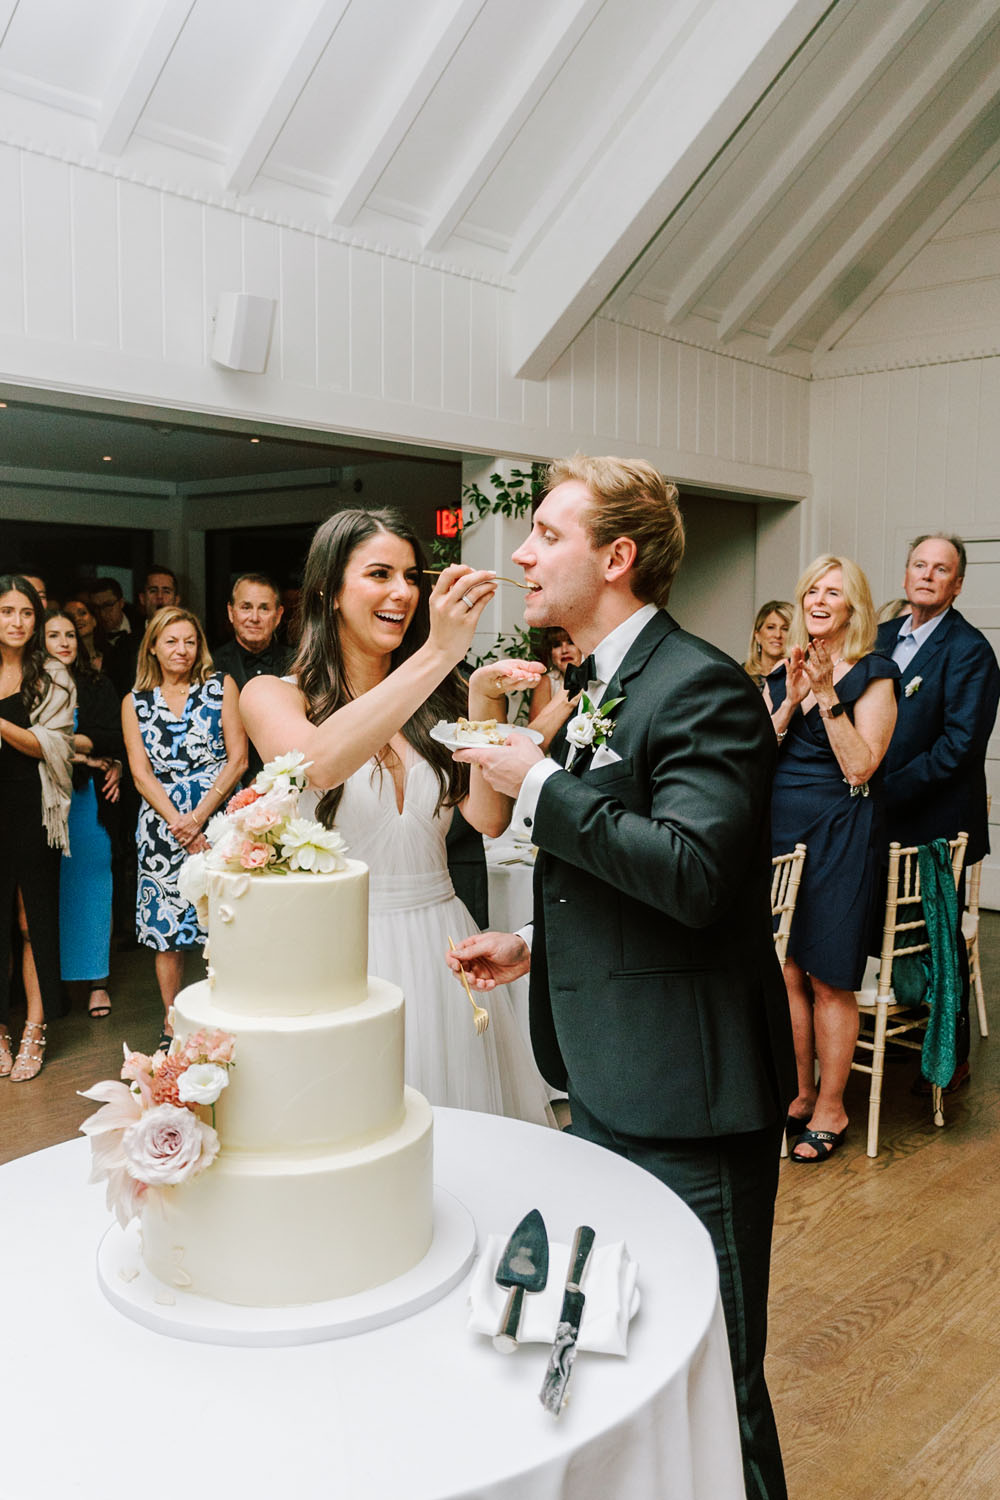 Romantic cake cutting at Hamptons wedding